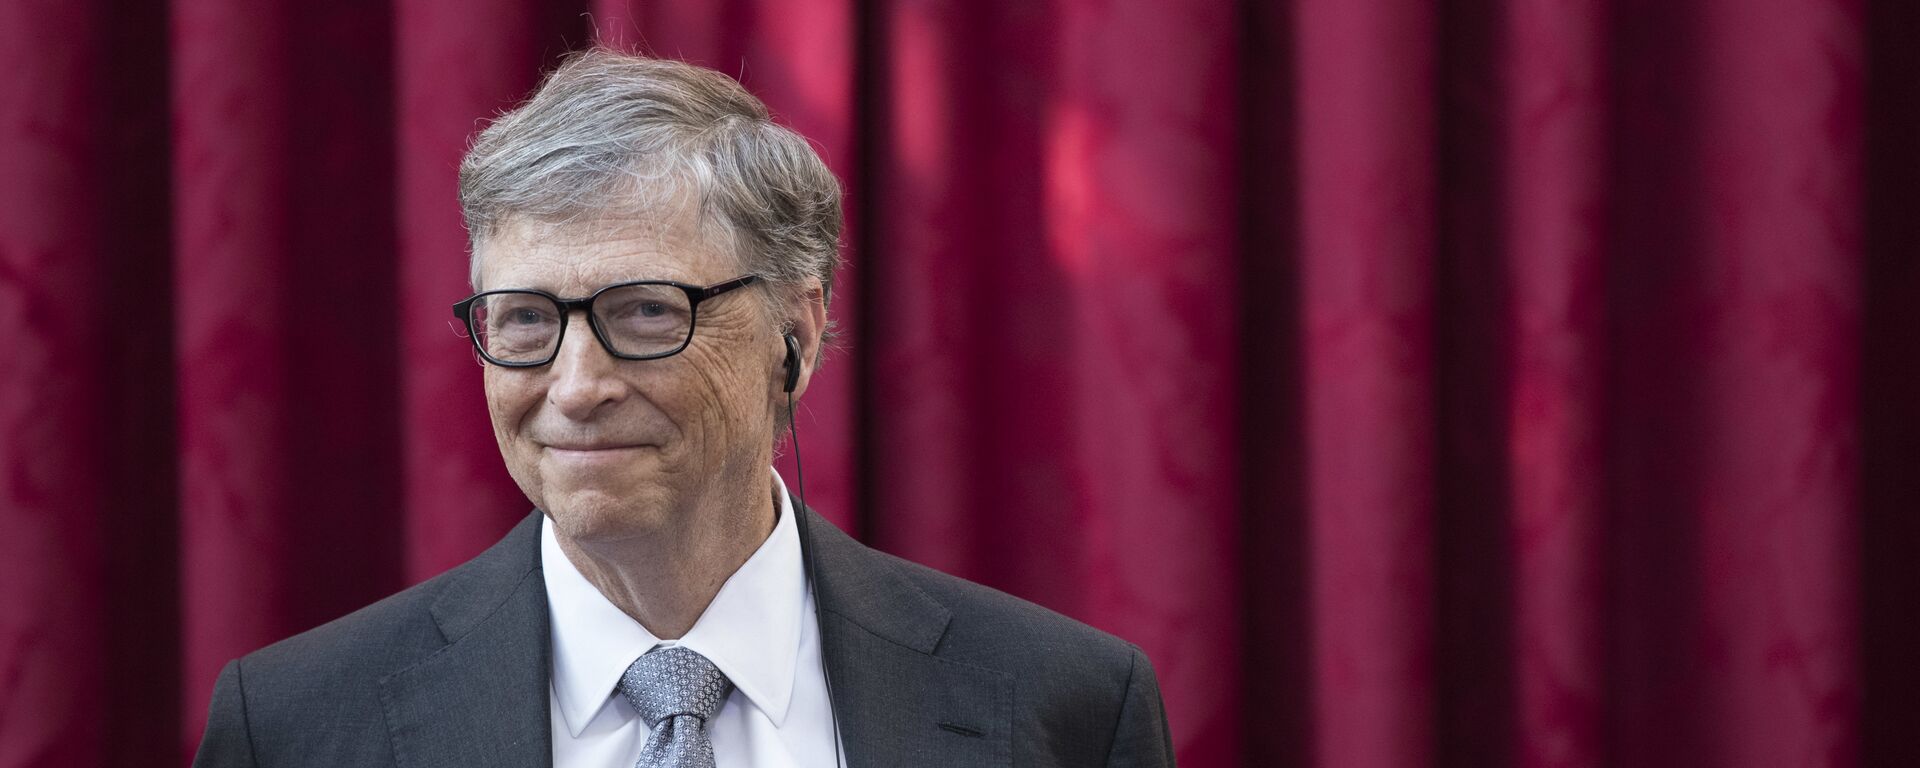 Bill Gates, cofundador de Microsoft - Sputnik Mundo, 1920, 15.02.2021